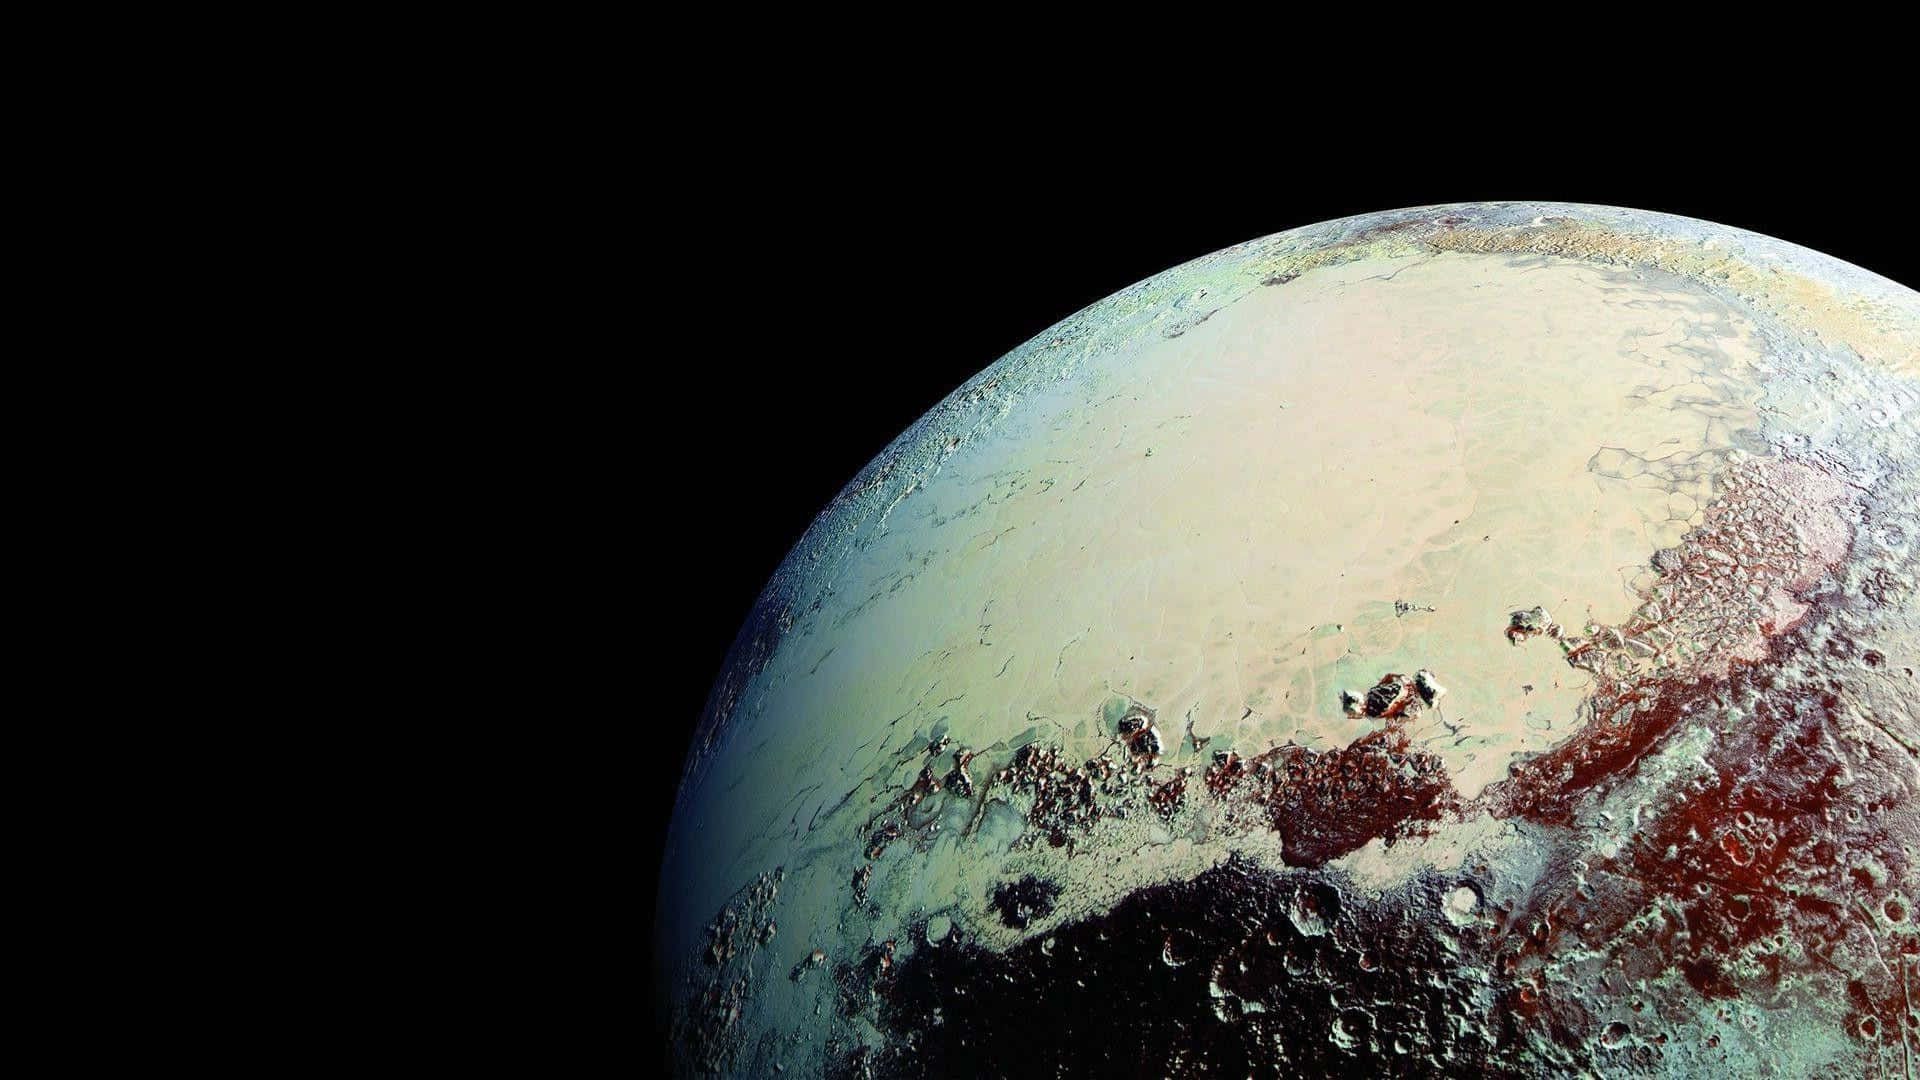 "Pluto&Its Moons Charon, Nix, and Hydra"